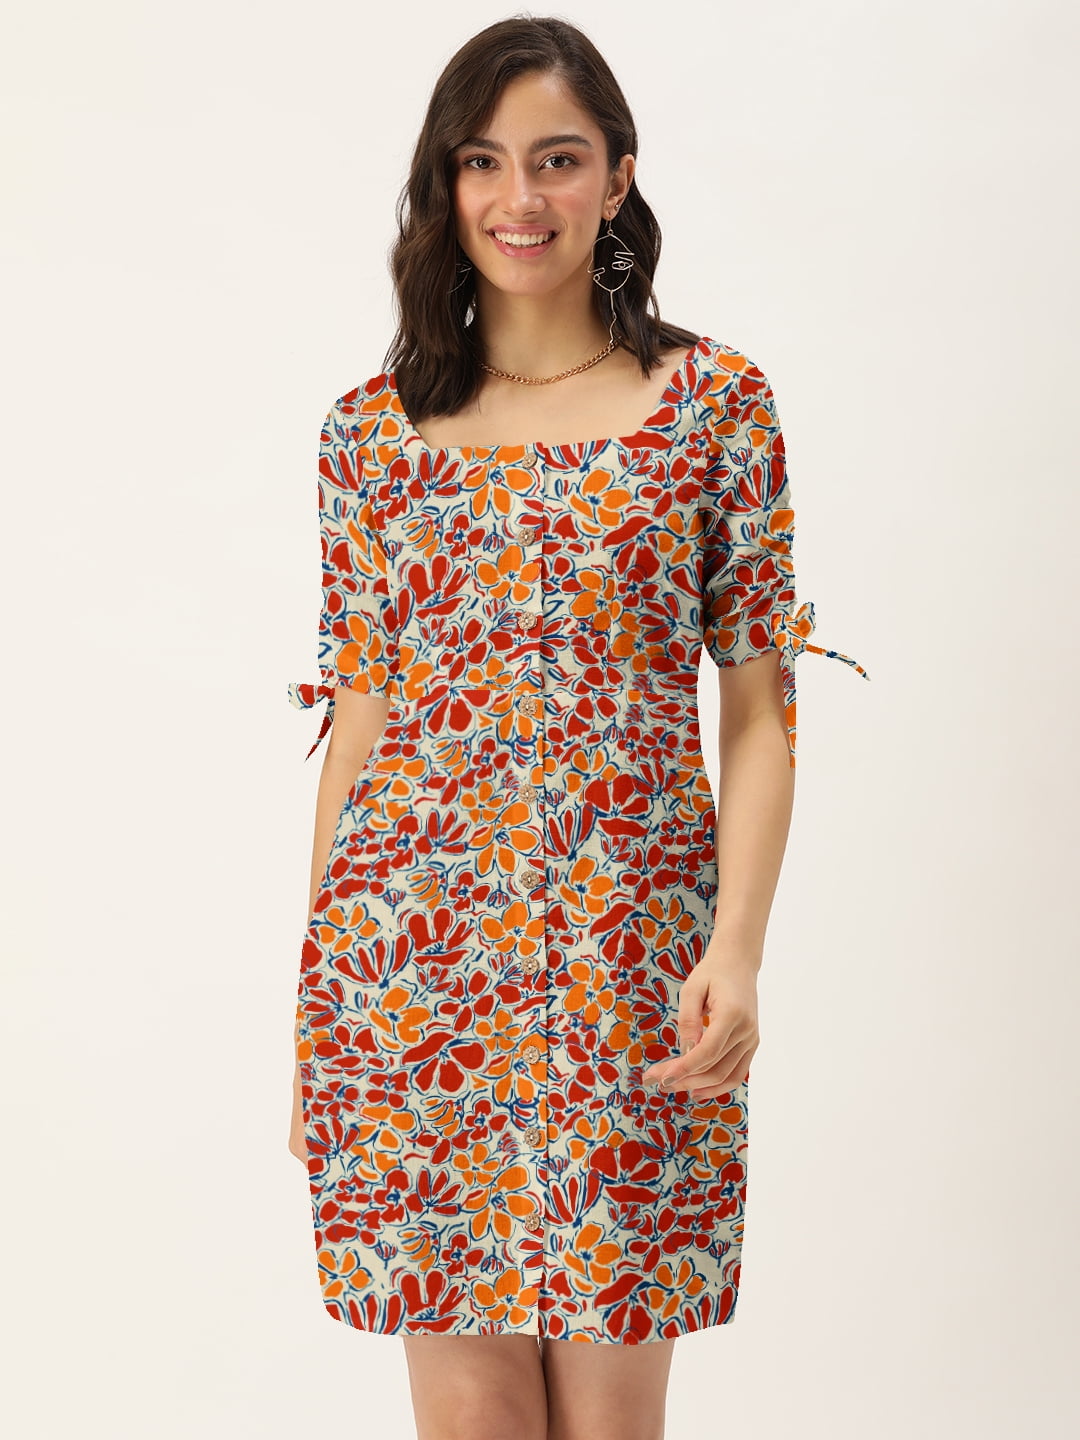 DressBerry Women's Solid Cotton Flex Dress Casual Summer Tie Up